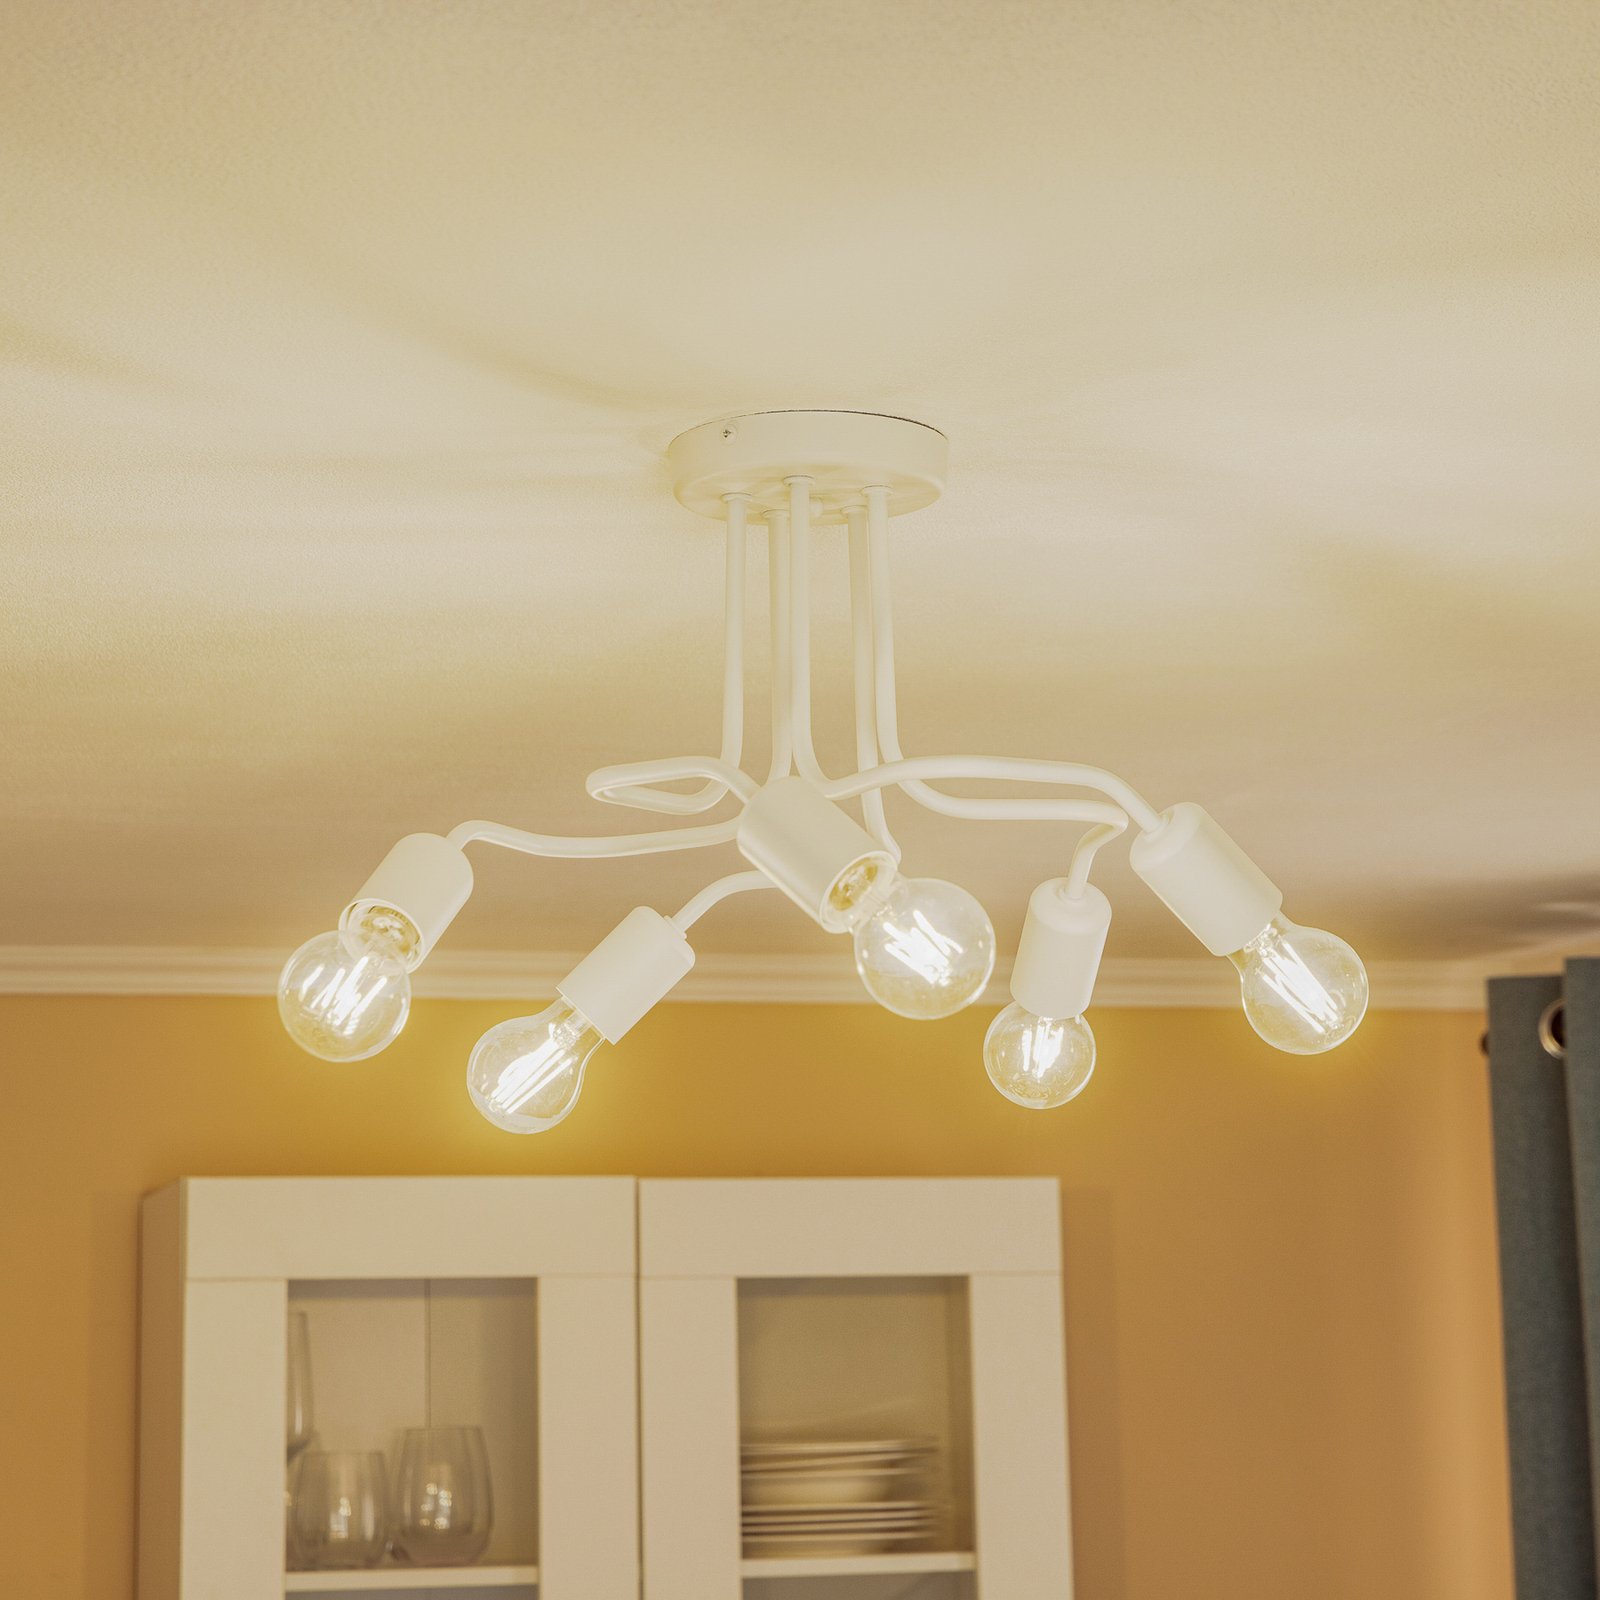 Ceiling light Joiy, distributed, 5-bulb, white